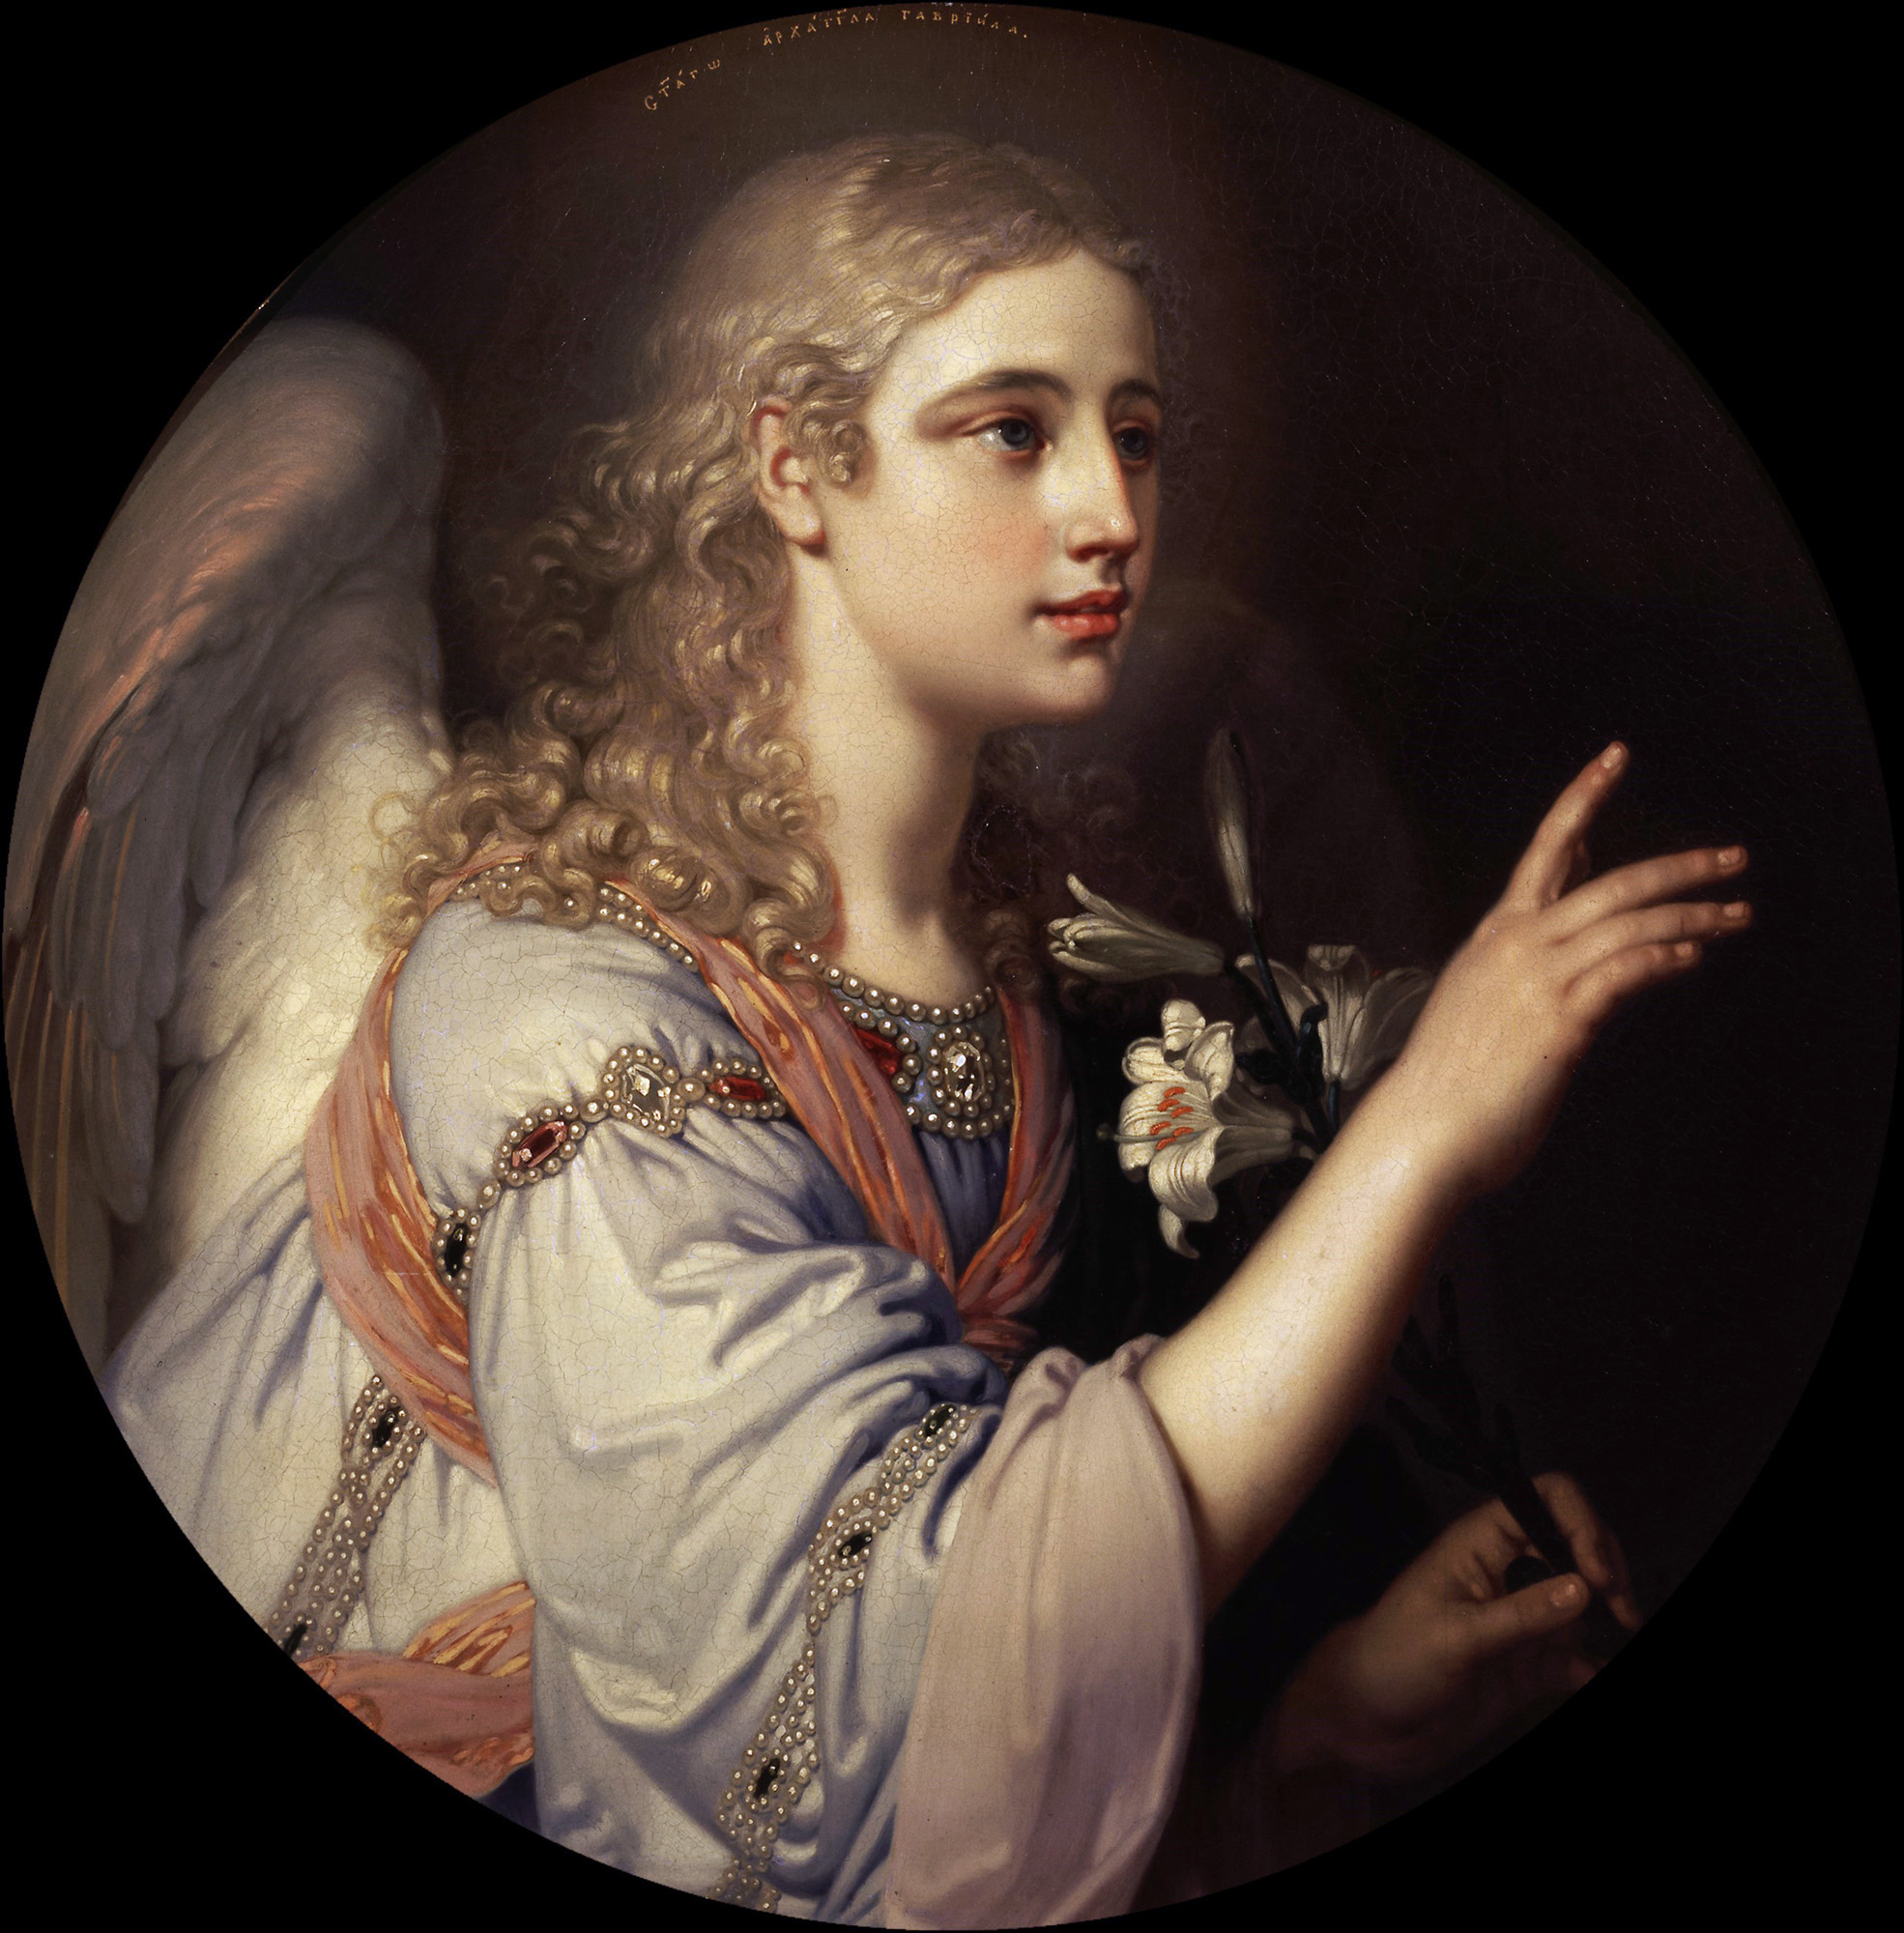 Archangel Gabriel from the Annunciation